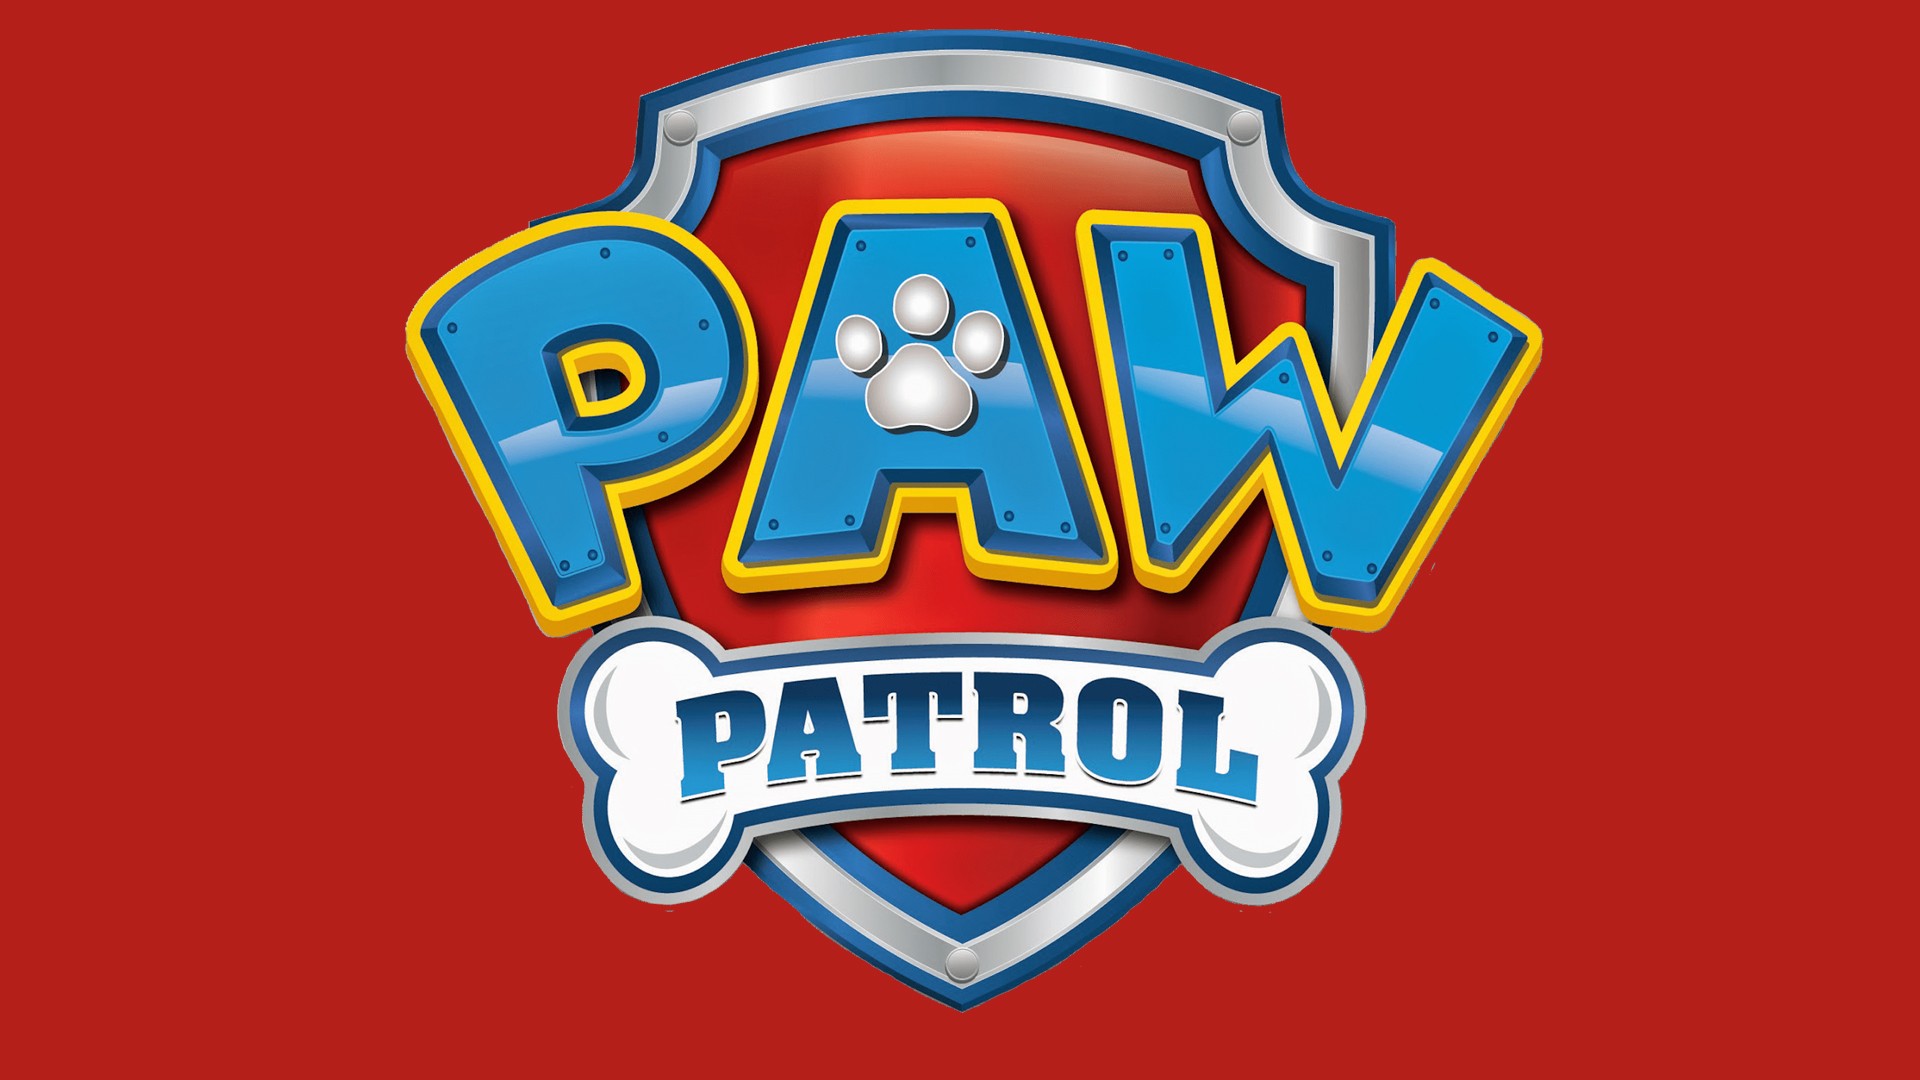 Paw patrol svg free - sharingdast